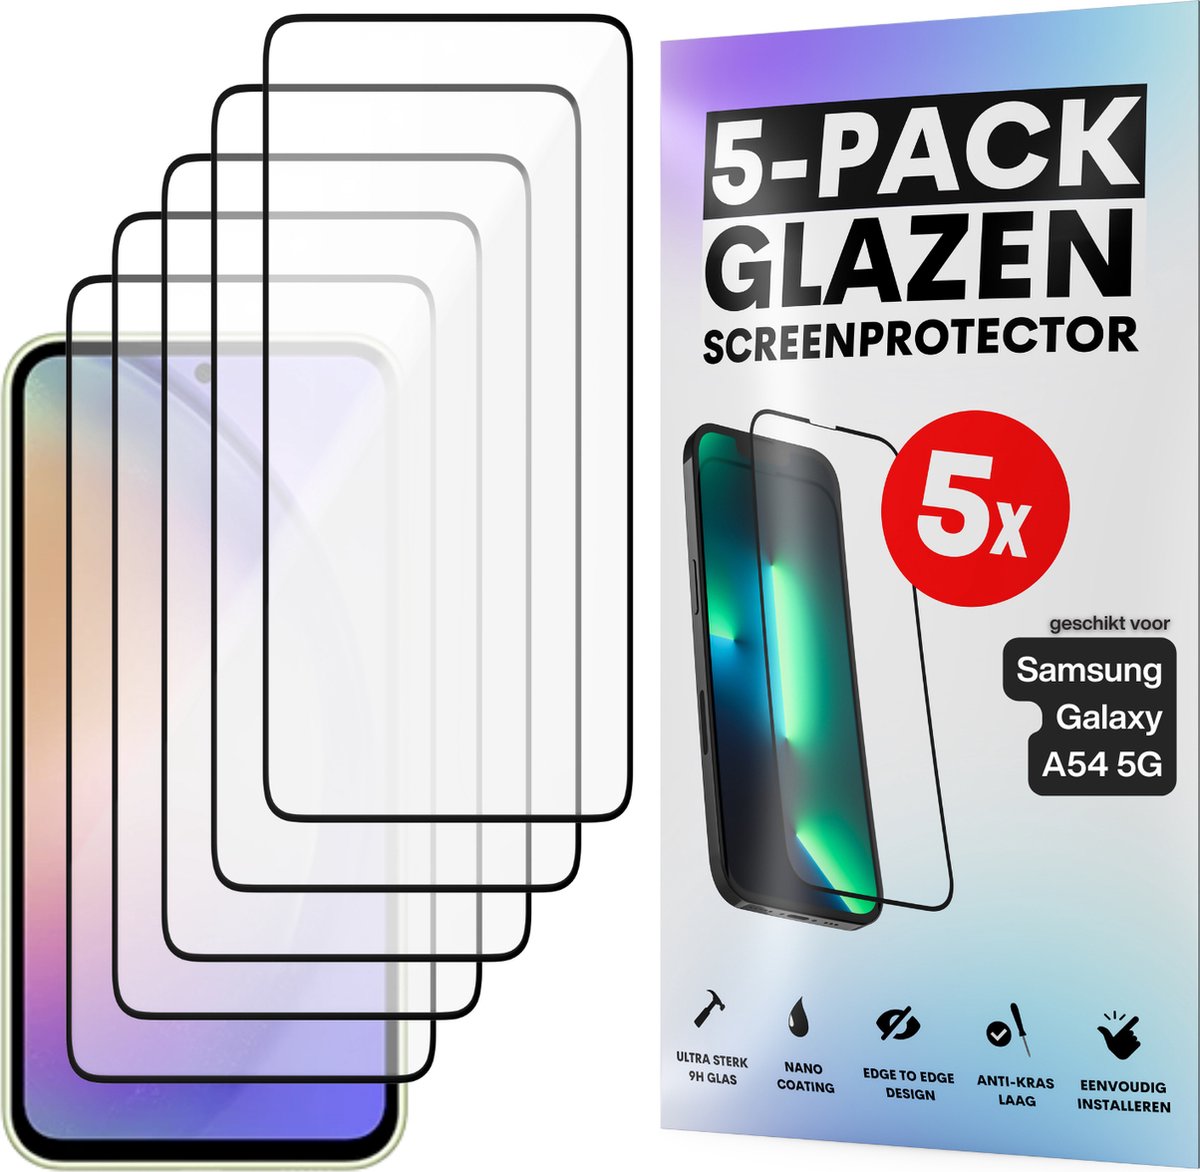 Screenprotector - Geschikt voor Samsung Galaxy A54 5G - Gehard Glas - Full Cover Tempered Glass - Case Friendly - 5 Pack